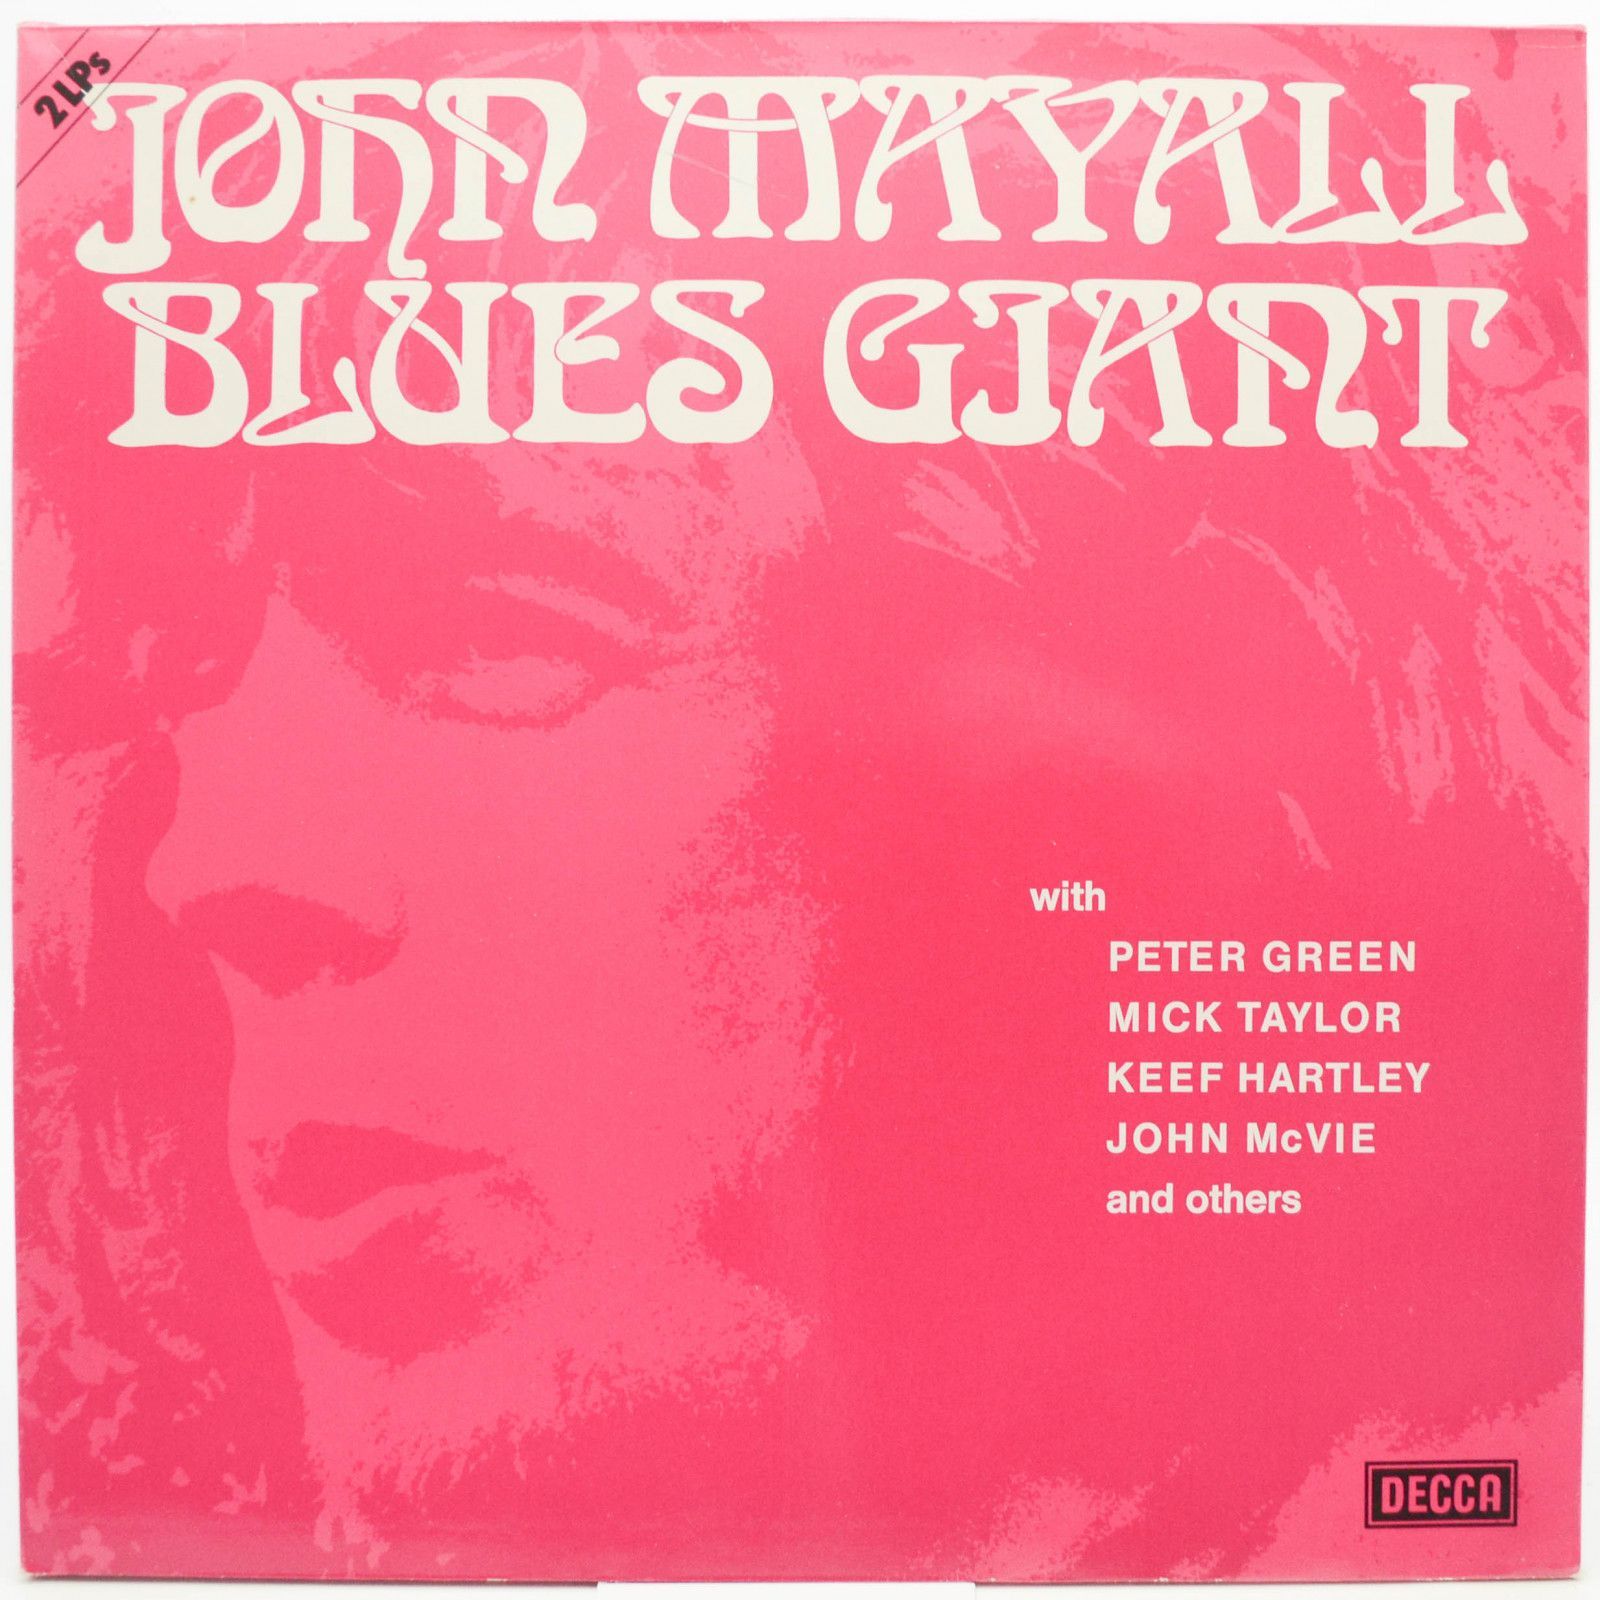 John Mayall — Blues Giant (2LP), 1969